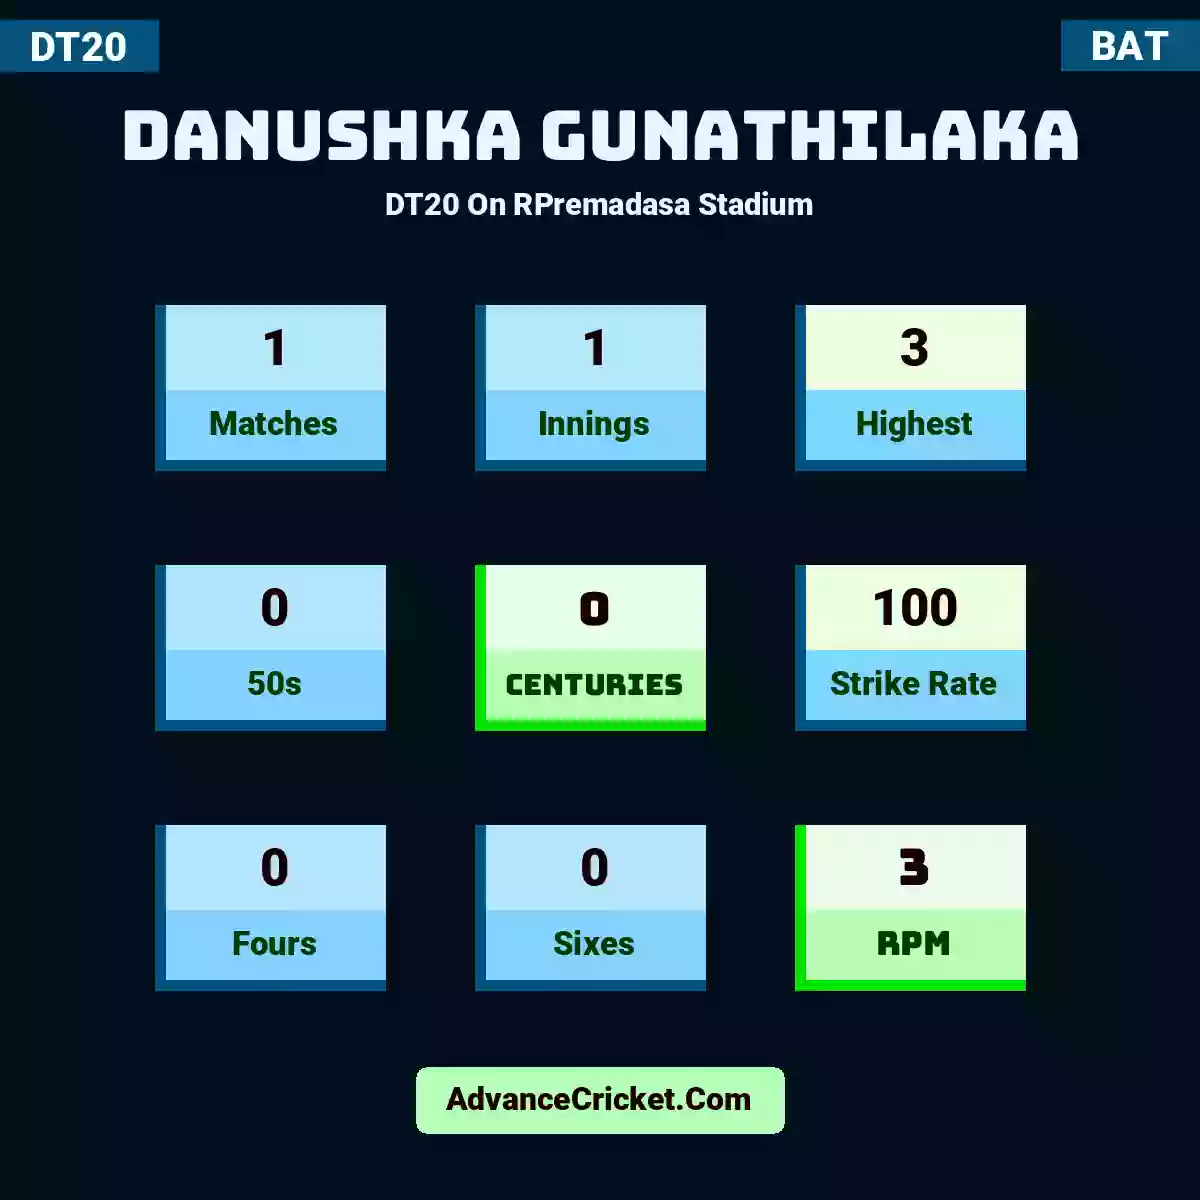 Danushka Gunathilaka DT20  On RPremadasa Stadium, Danushka Gunathilaka played 1 matches, scored 3 runs as highest, 0 half-centuries, and 0 centuries, with a strike rate of 100. D.Gunathilaka hit 0 fours and 0 sixes, with an RPM of 3.